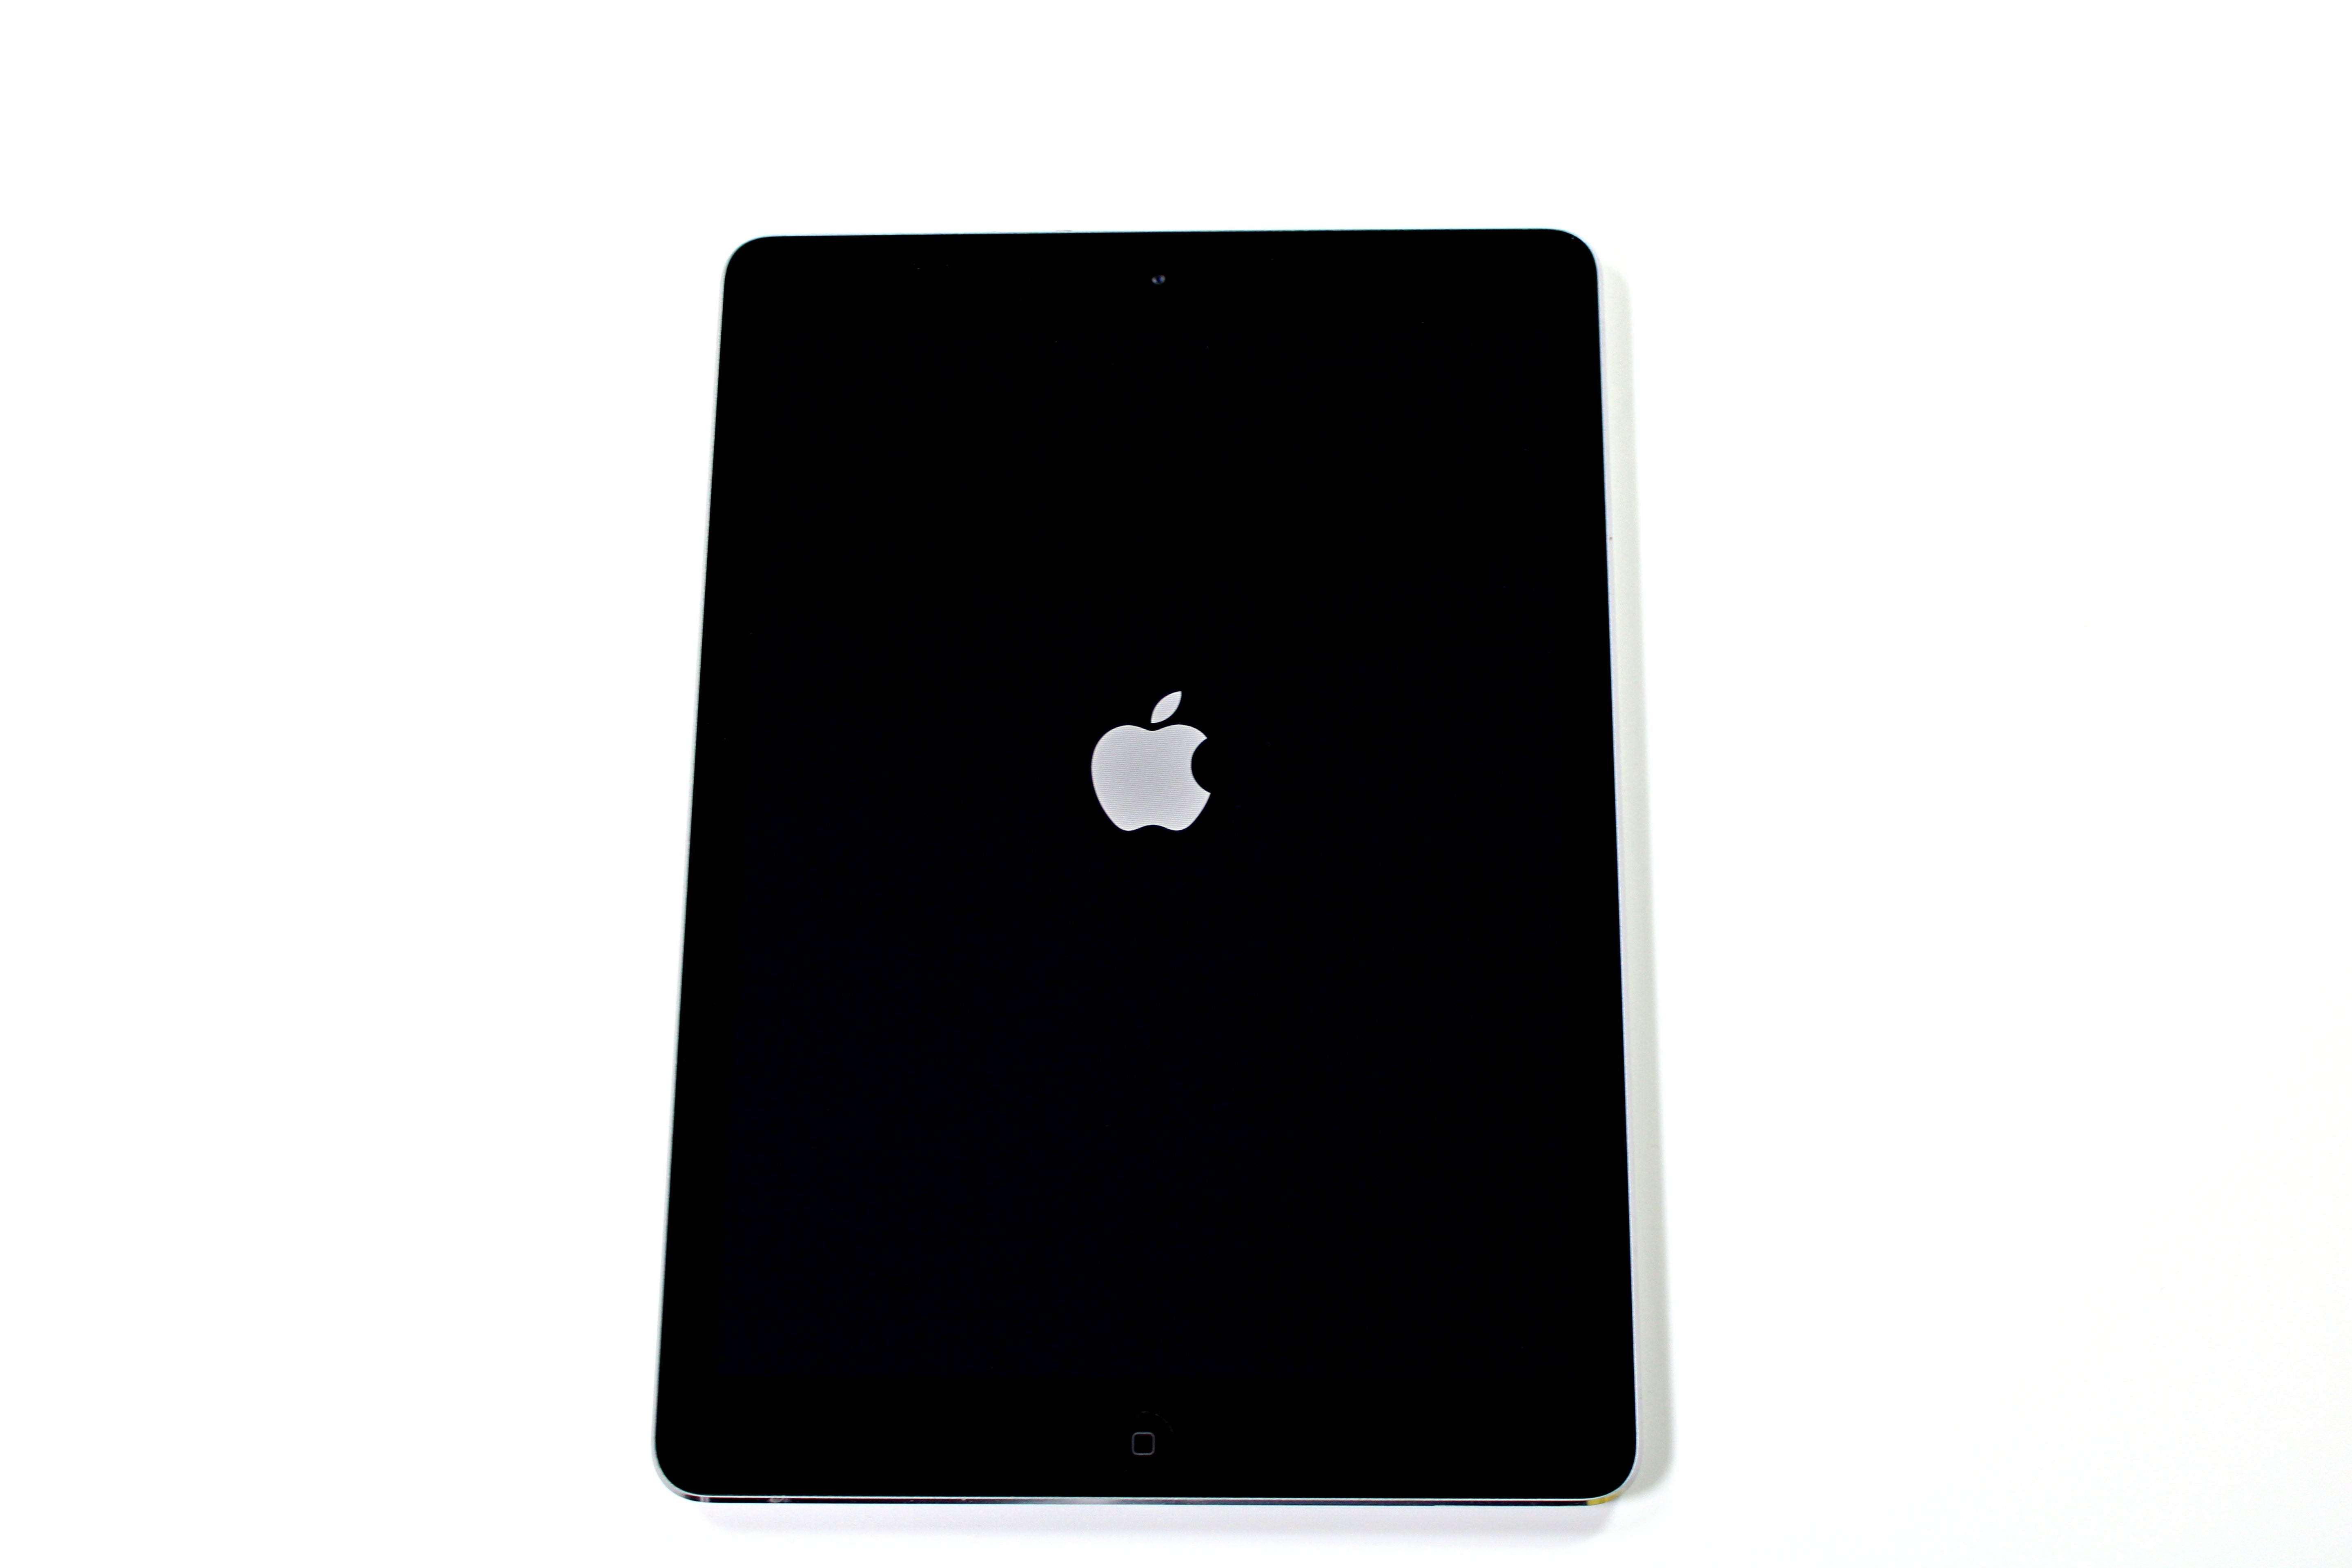  Apple iPad Air 16GB WiFi Tablet - Space Gray (Renewed